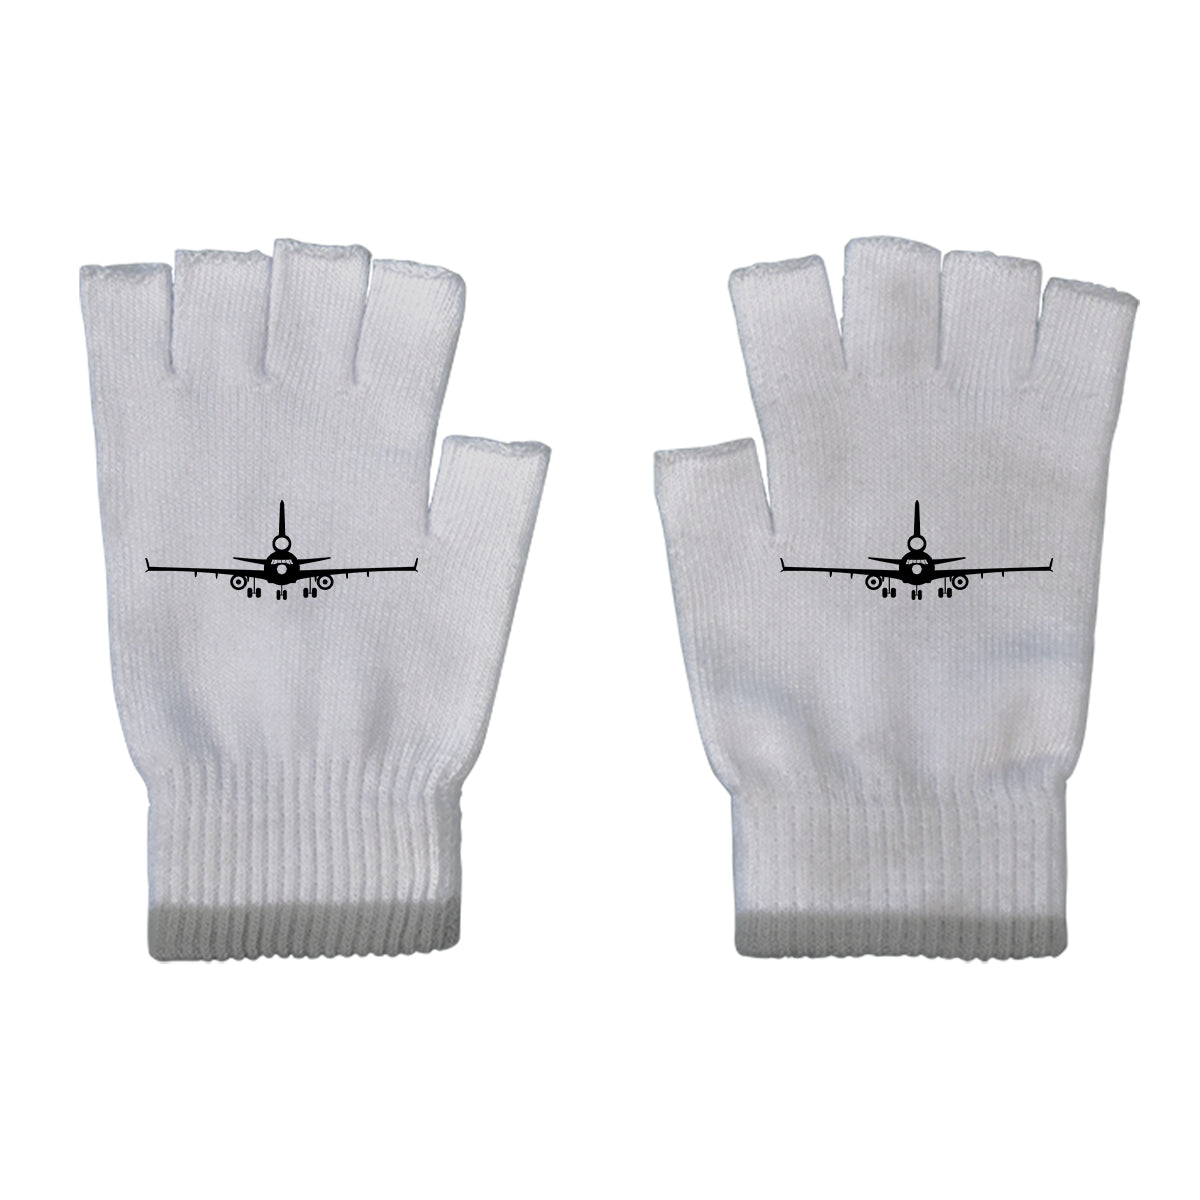 McDonnell Douglas MD-11 Silhouette Plane Designed Cut Gloves